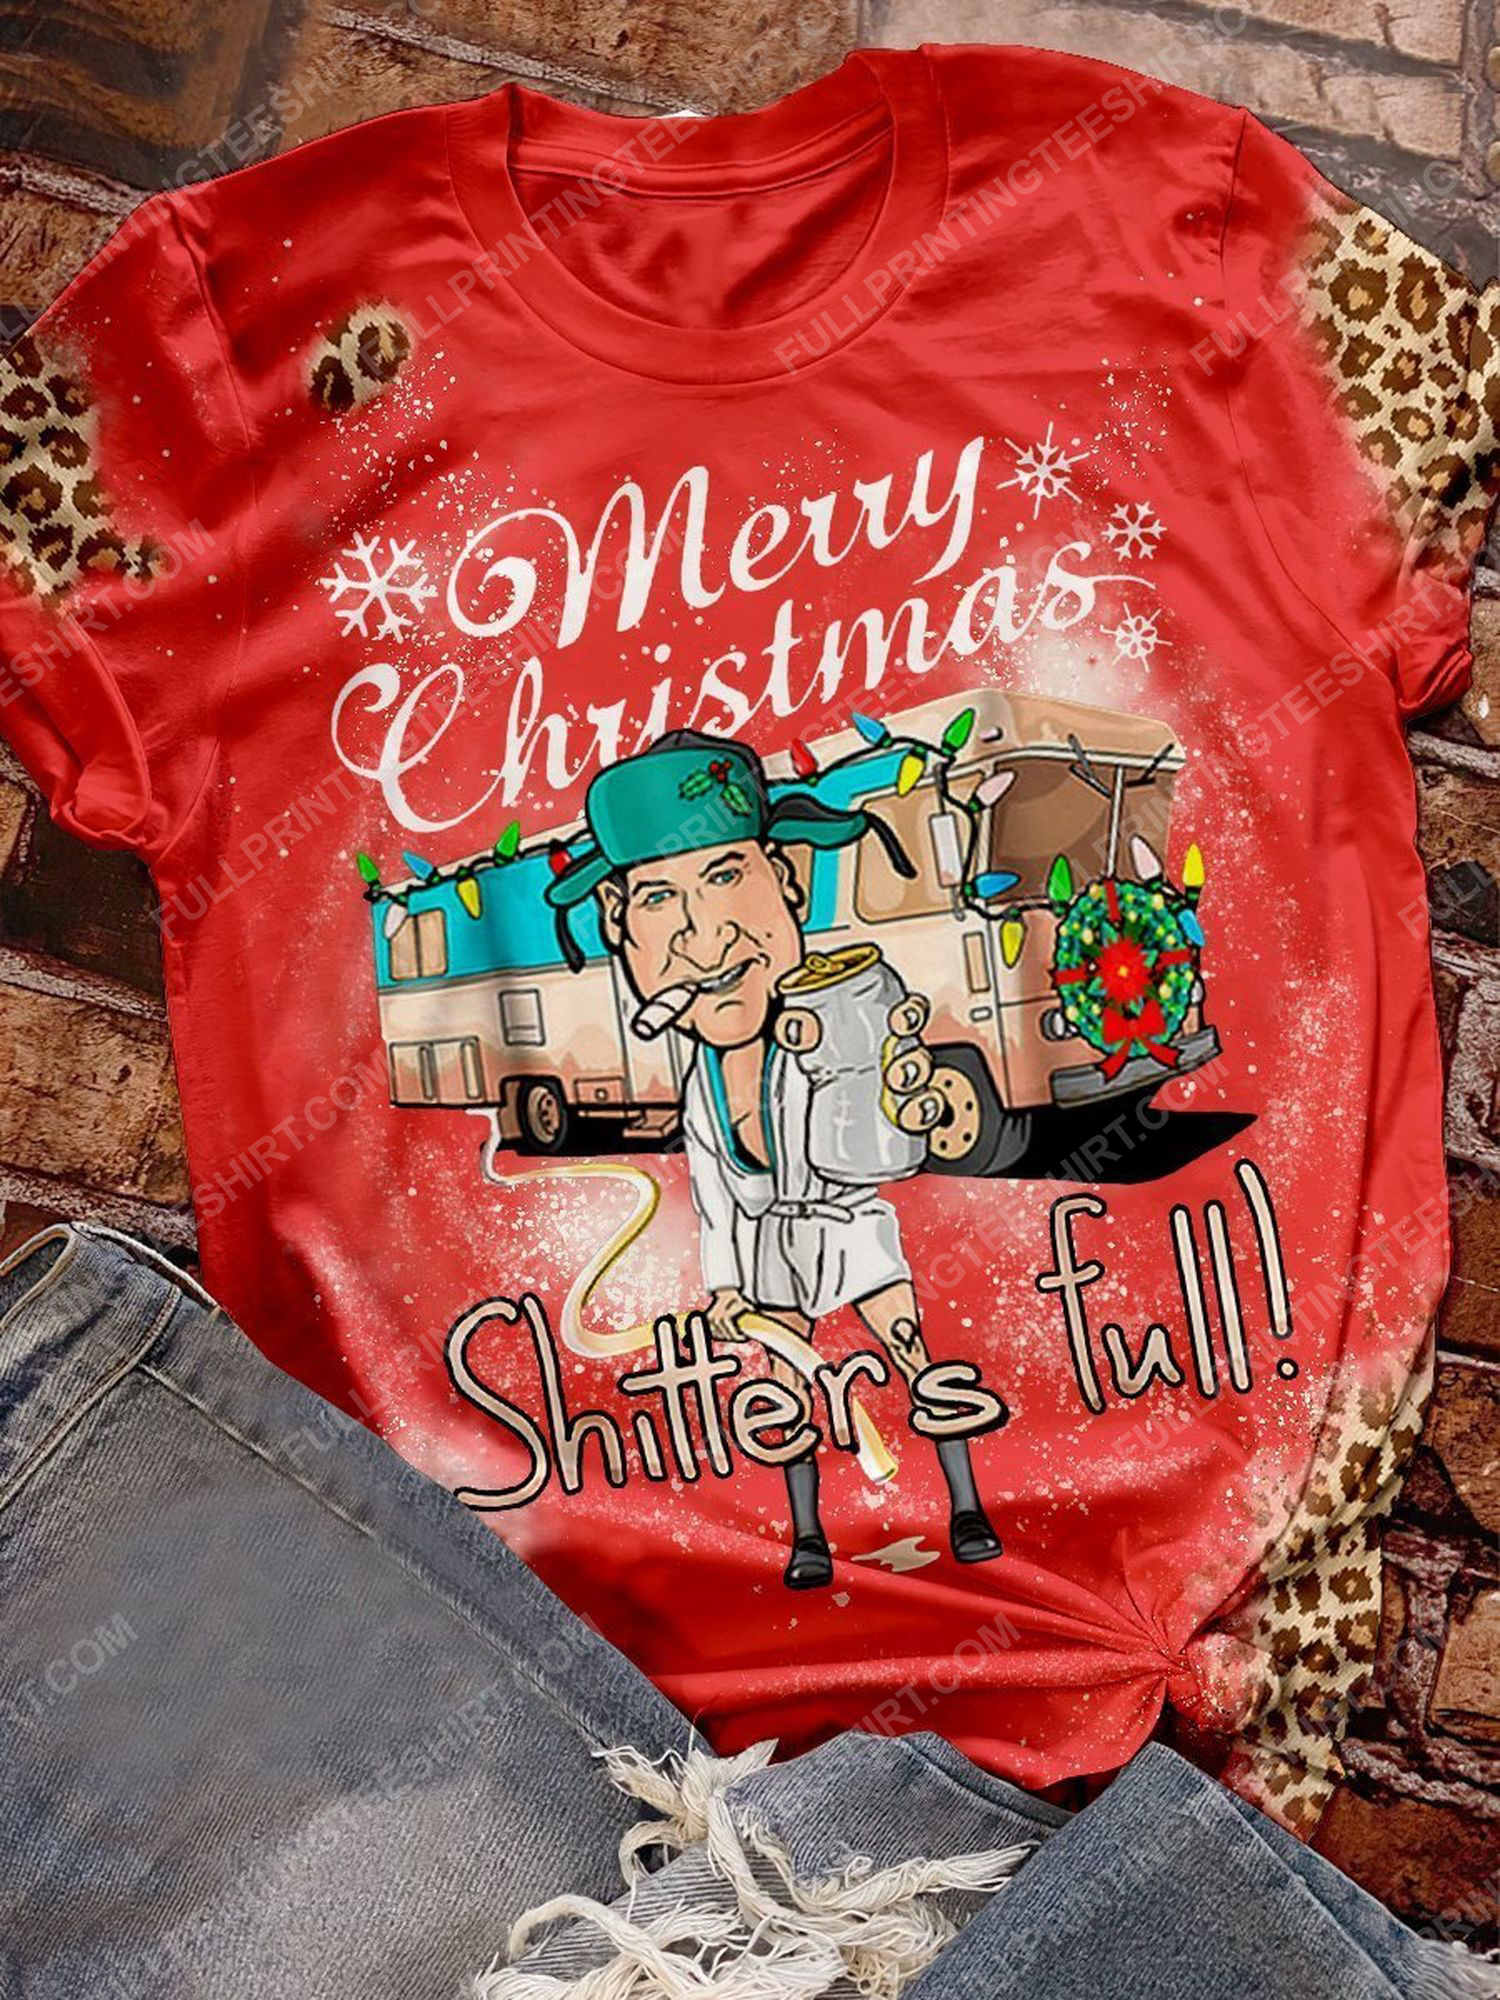 Christmas vacation cousin eddie shitter's full shirt 3